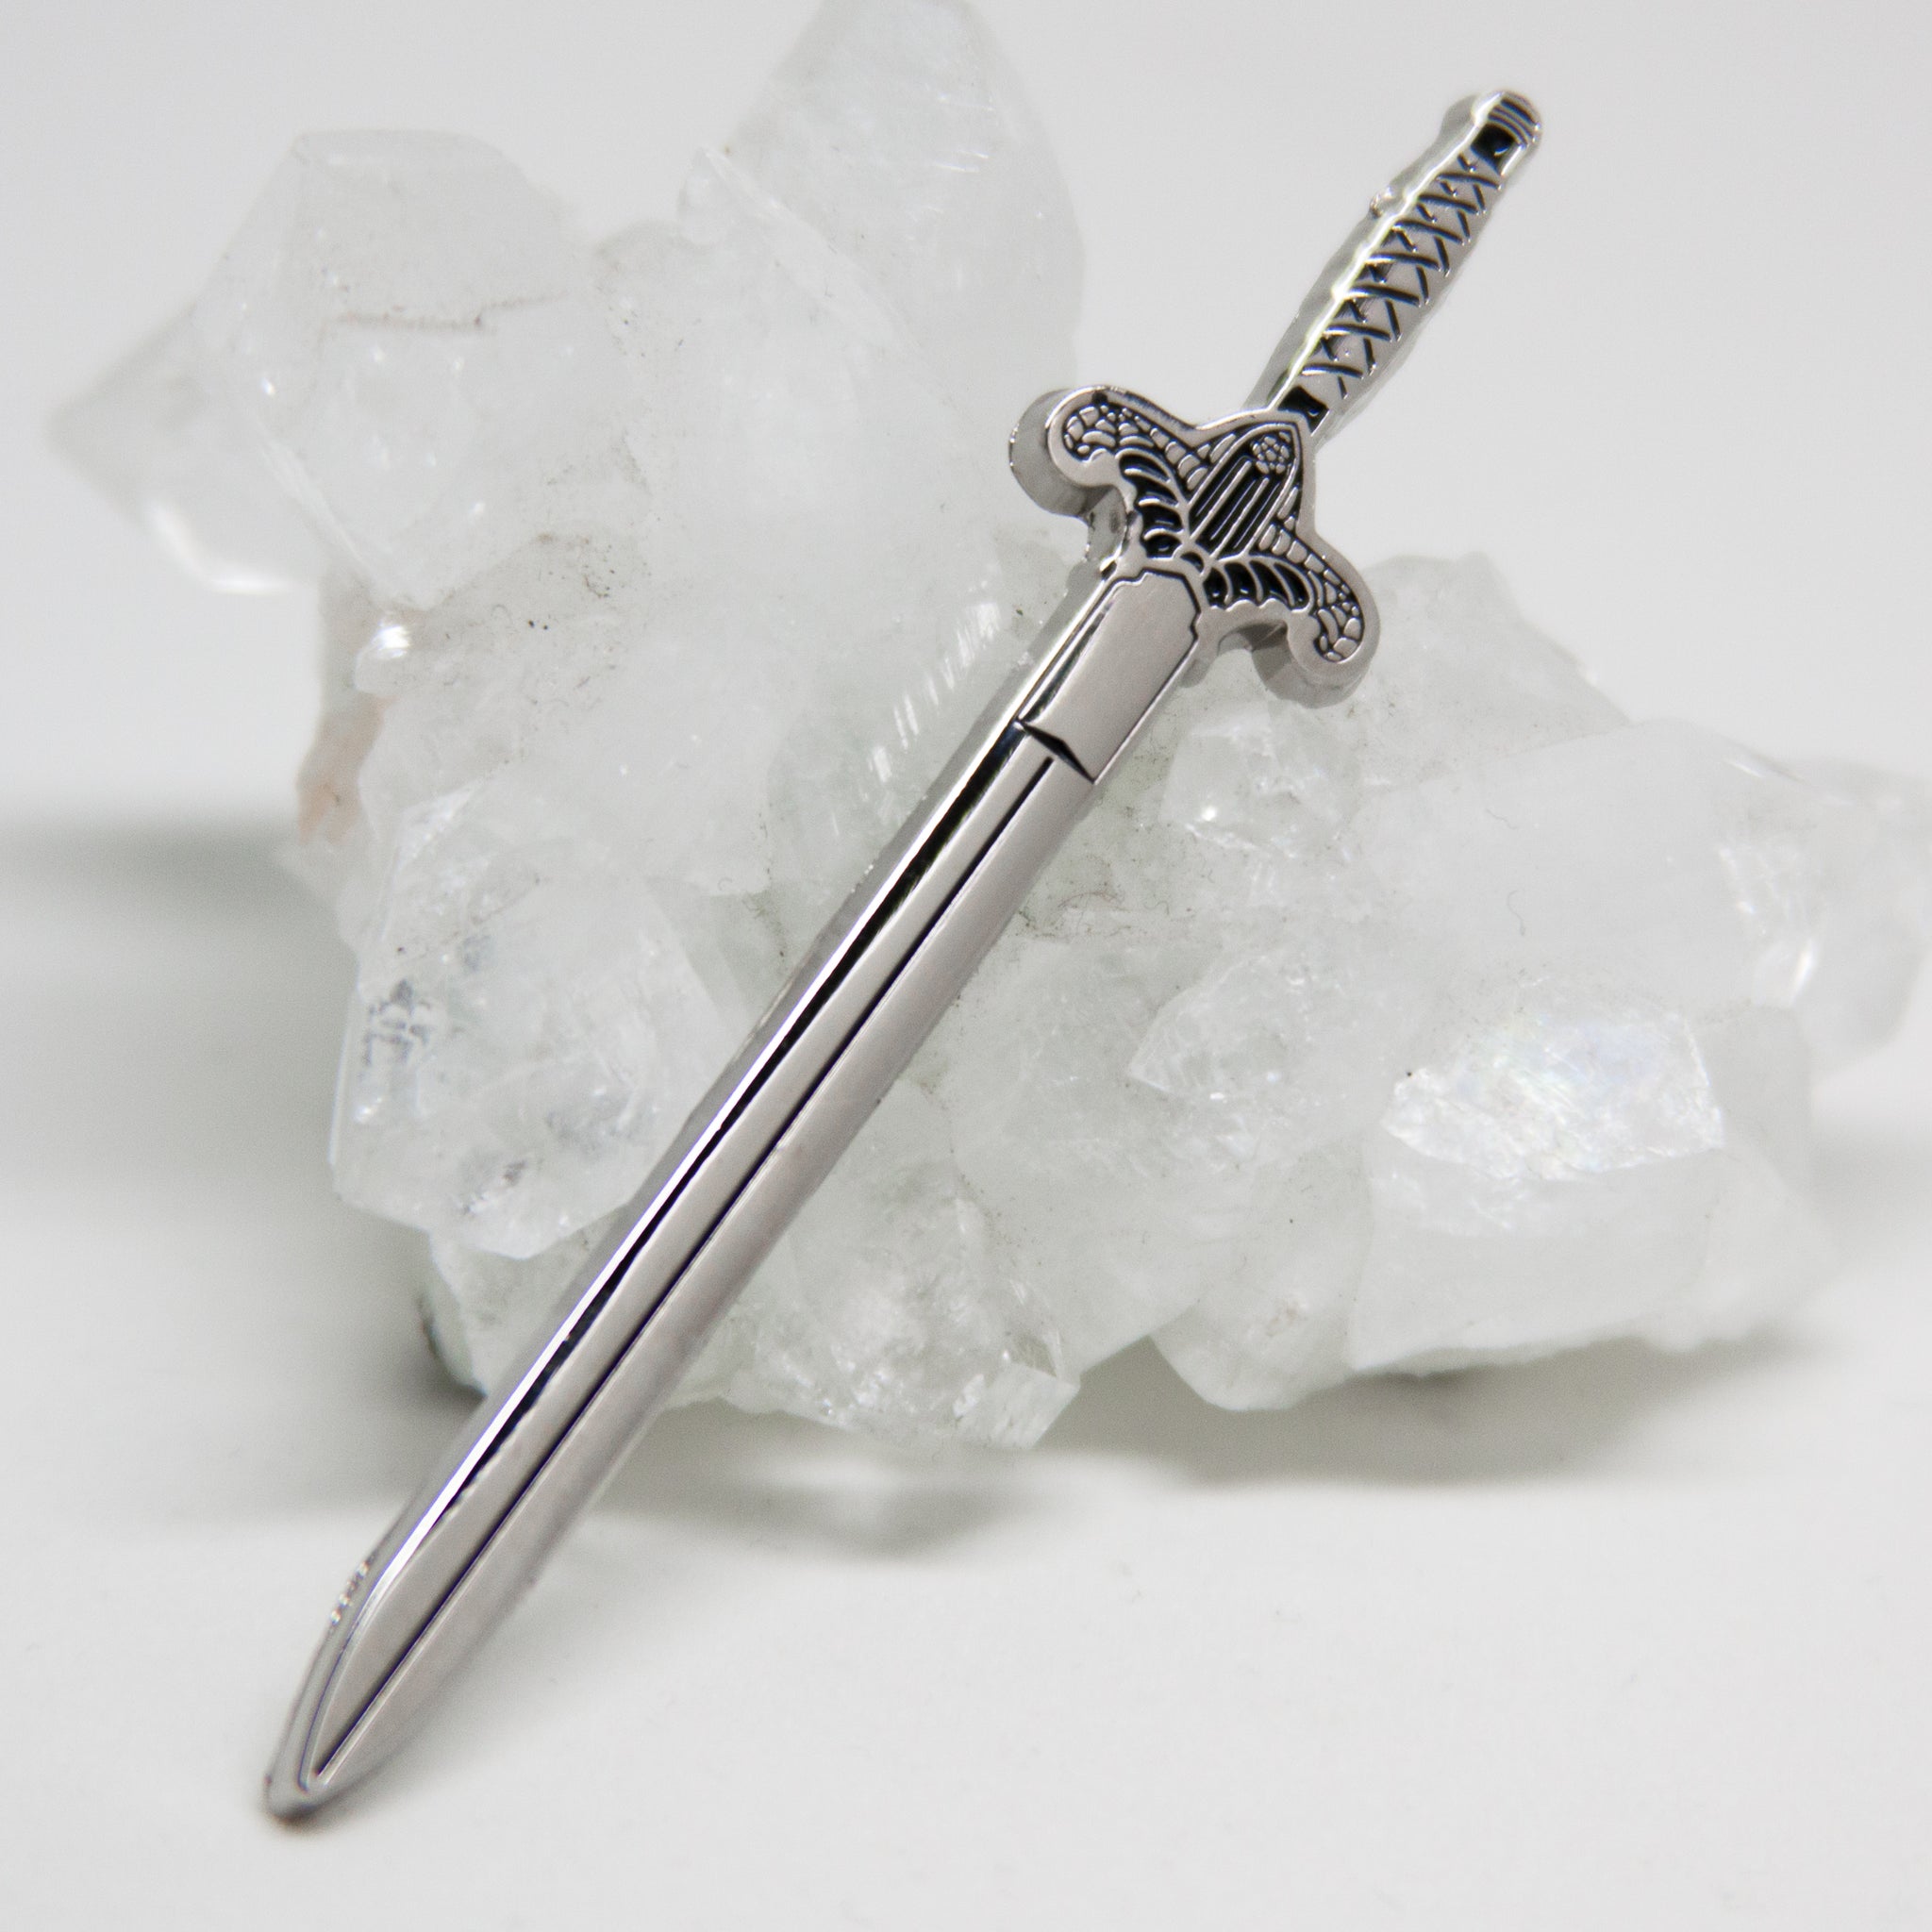 Gothic Sword enamel pin in silver and black enamel.